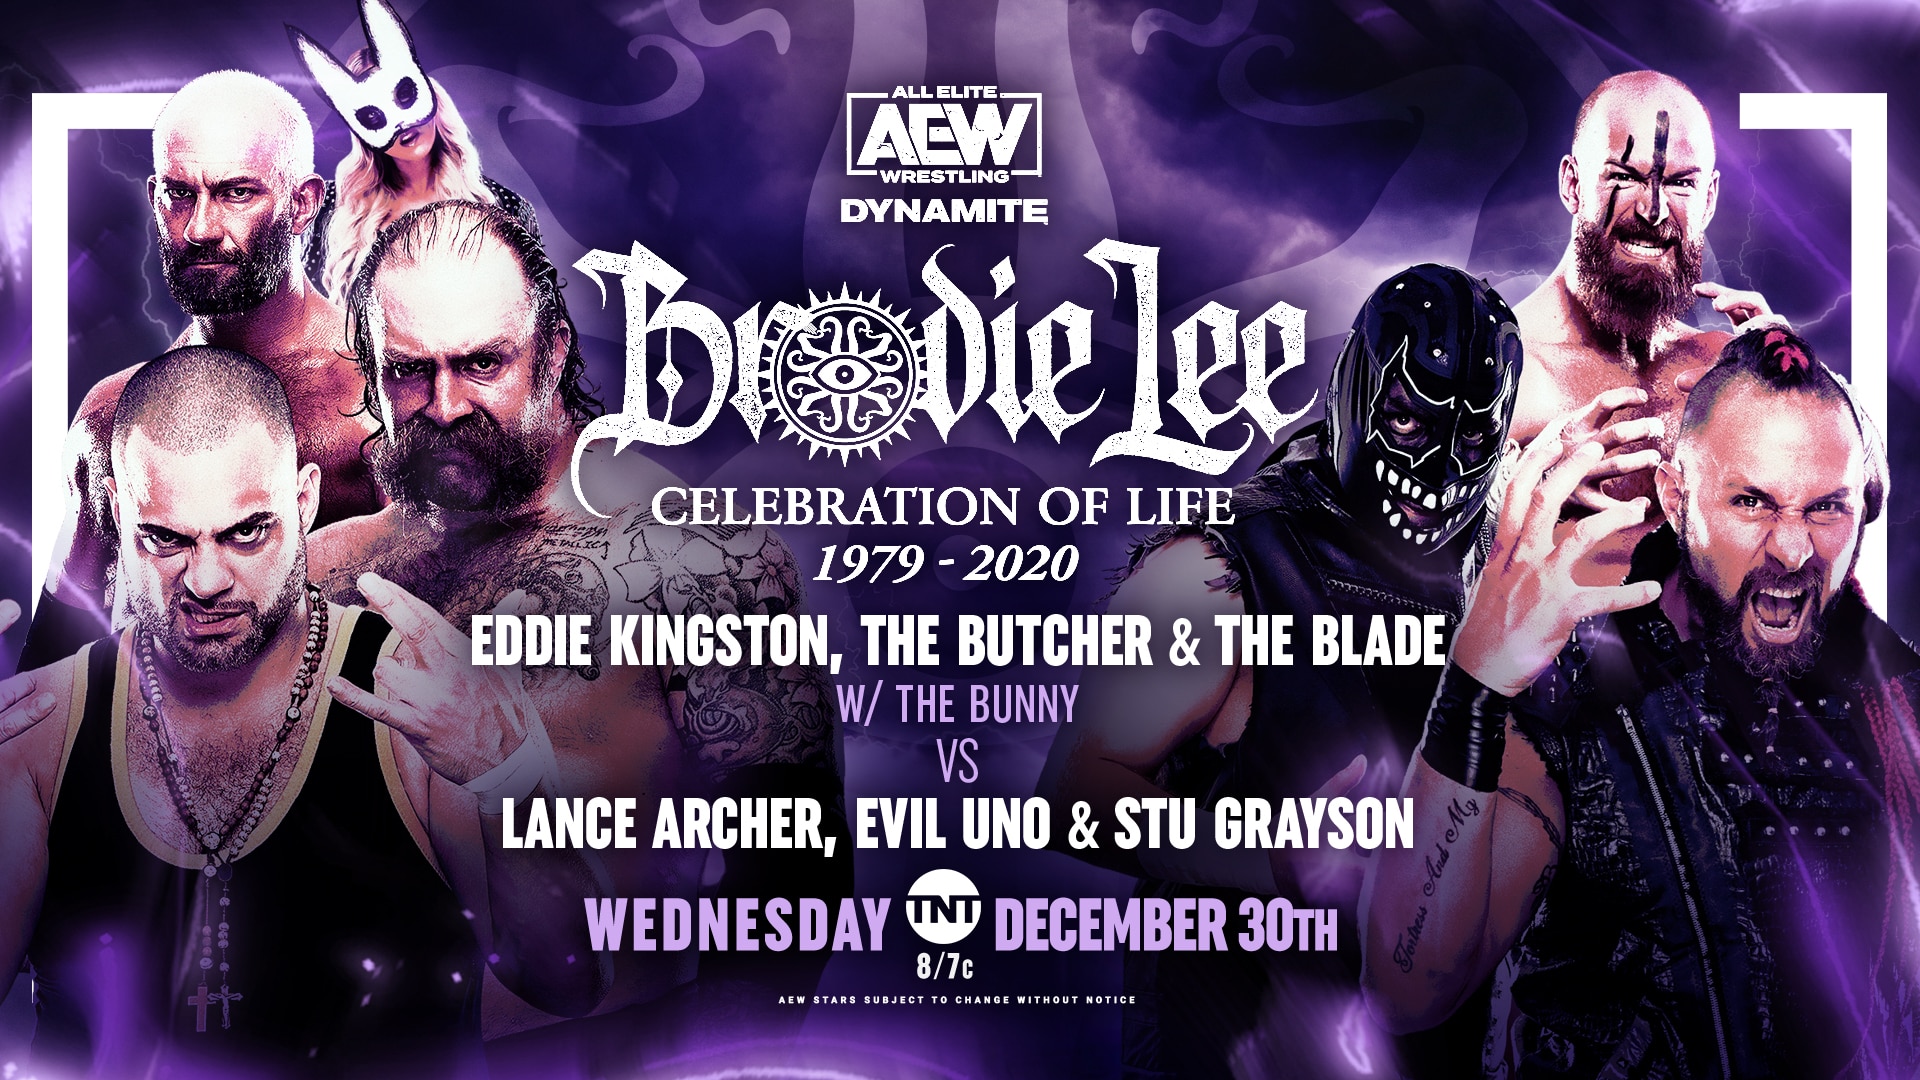  Eddie Kingston & Butcher and Blade vs Archer, Evil Uno & Stu Grayson